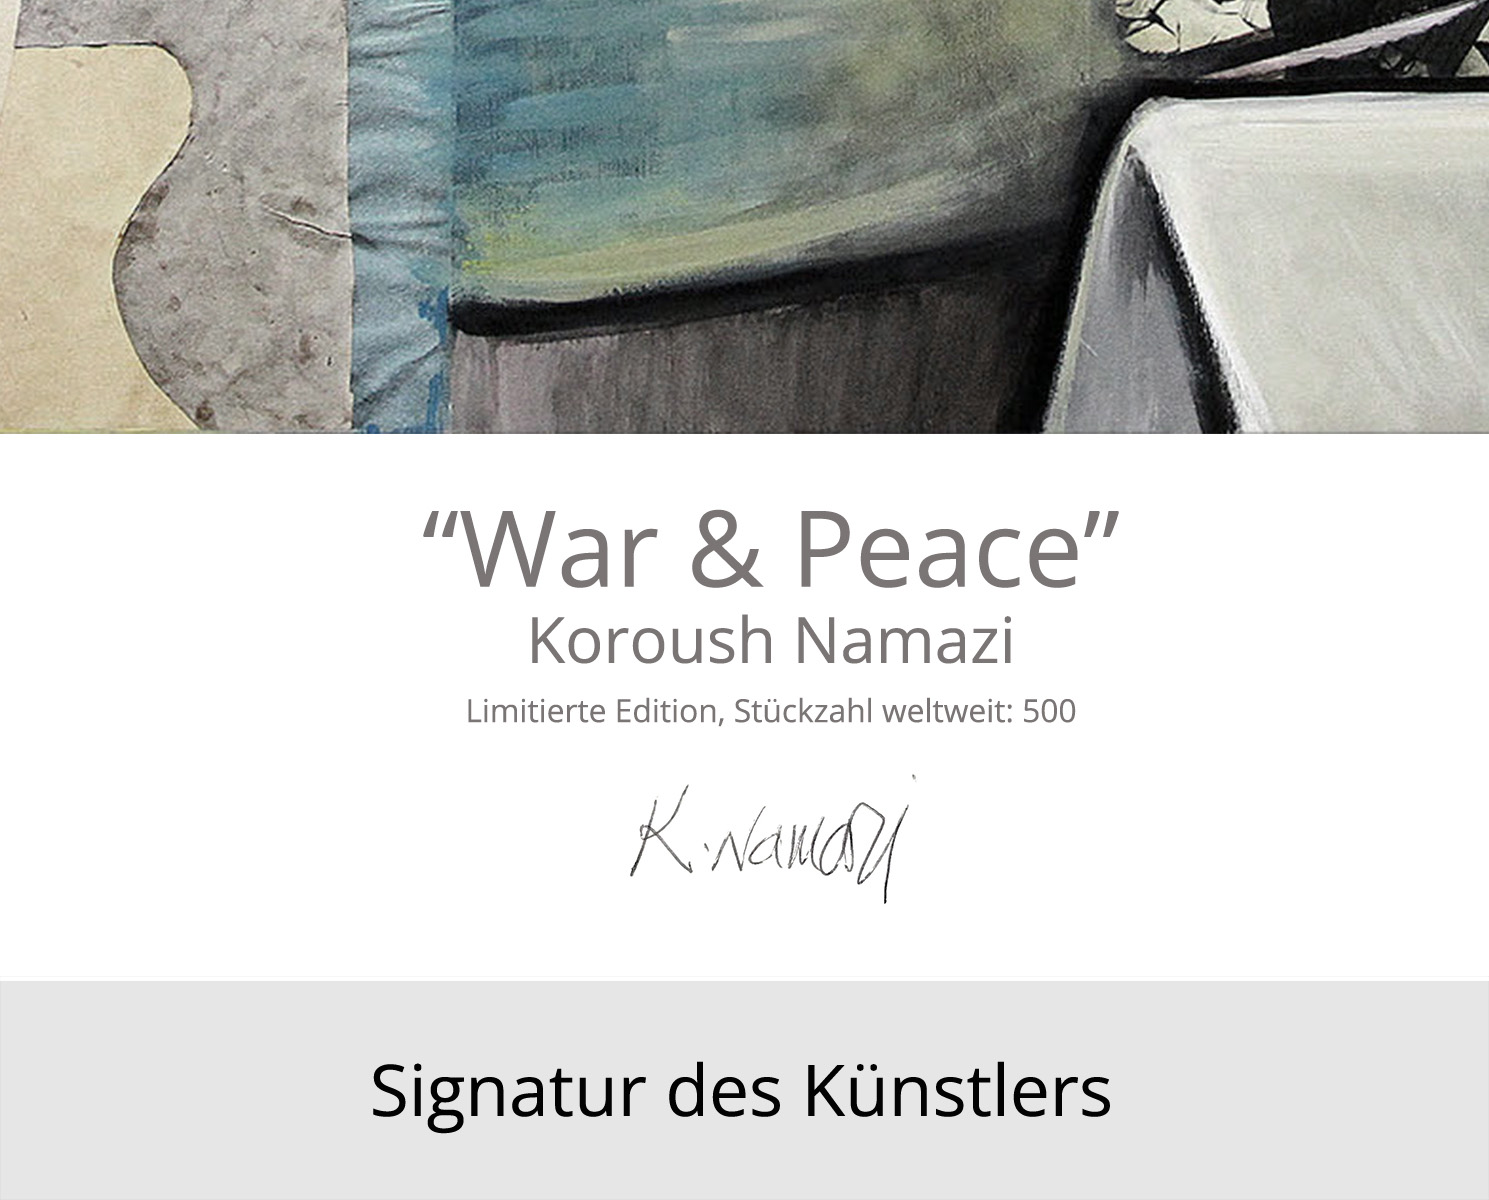 Limitierte Edition auf Papier, K. Namazi: "War & Peace", Fineartprint